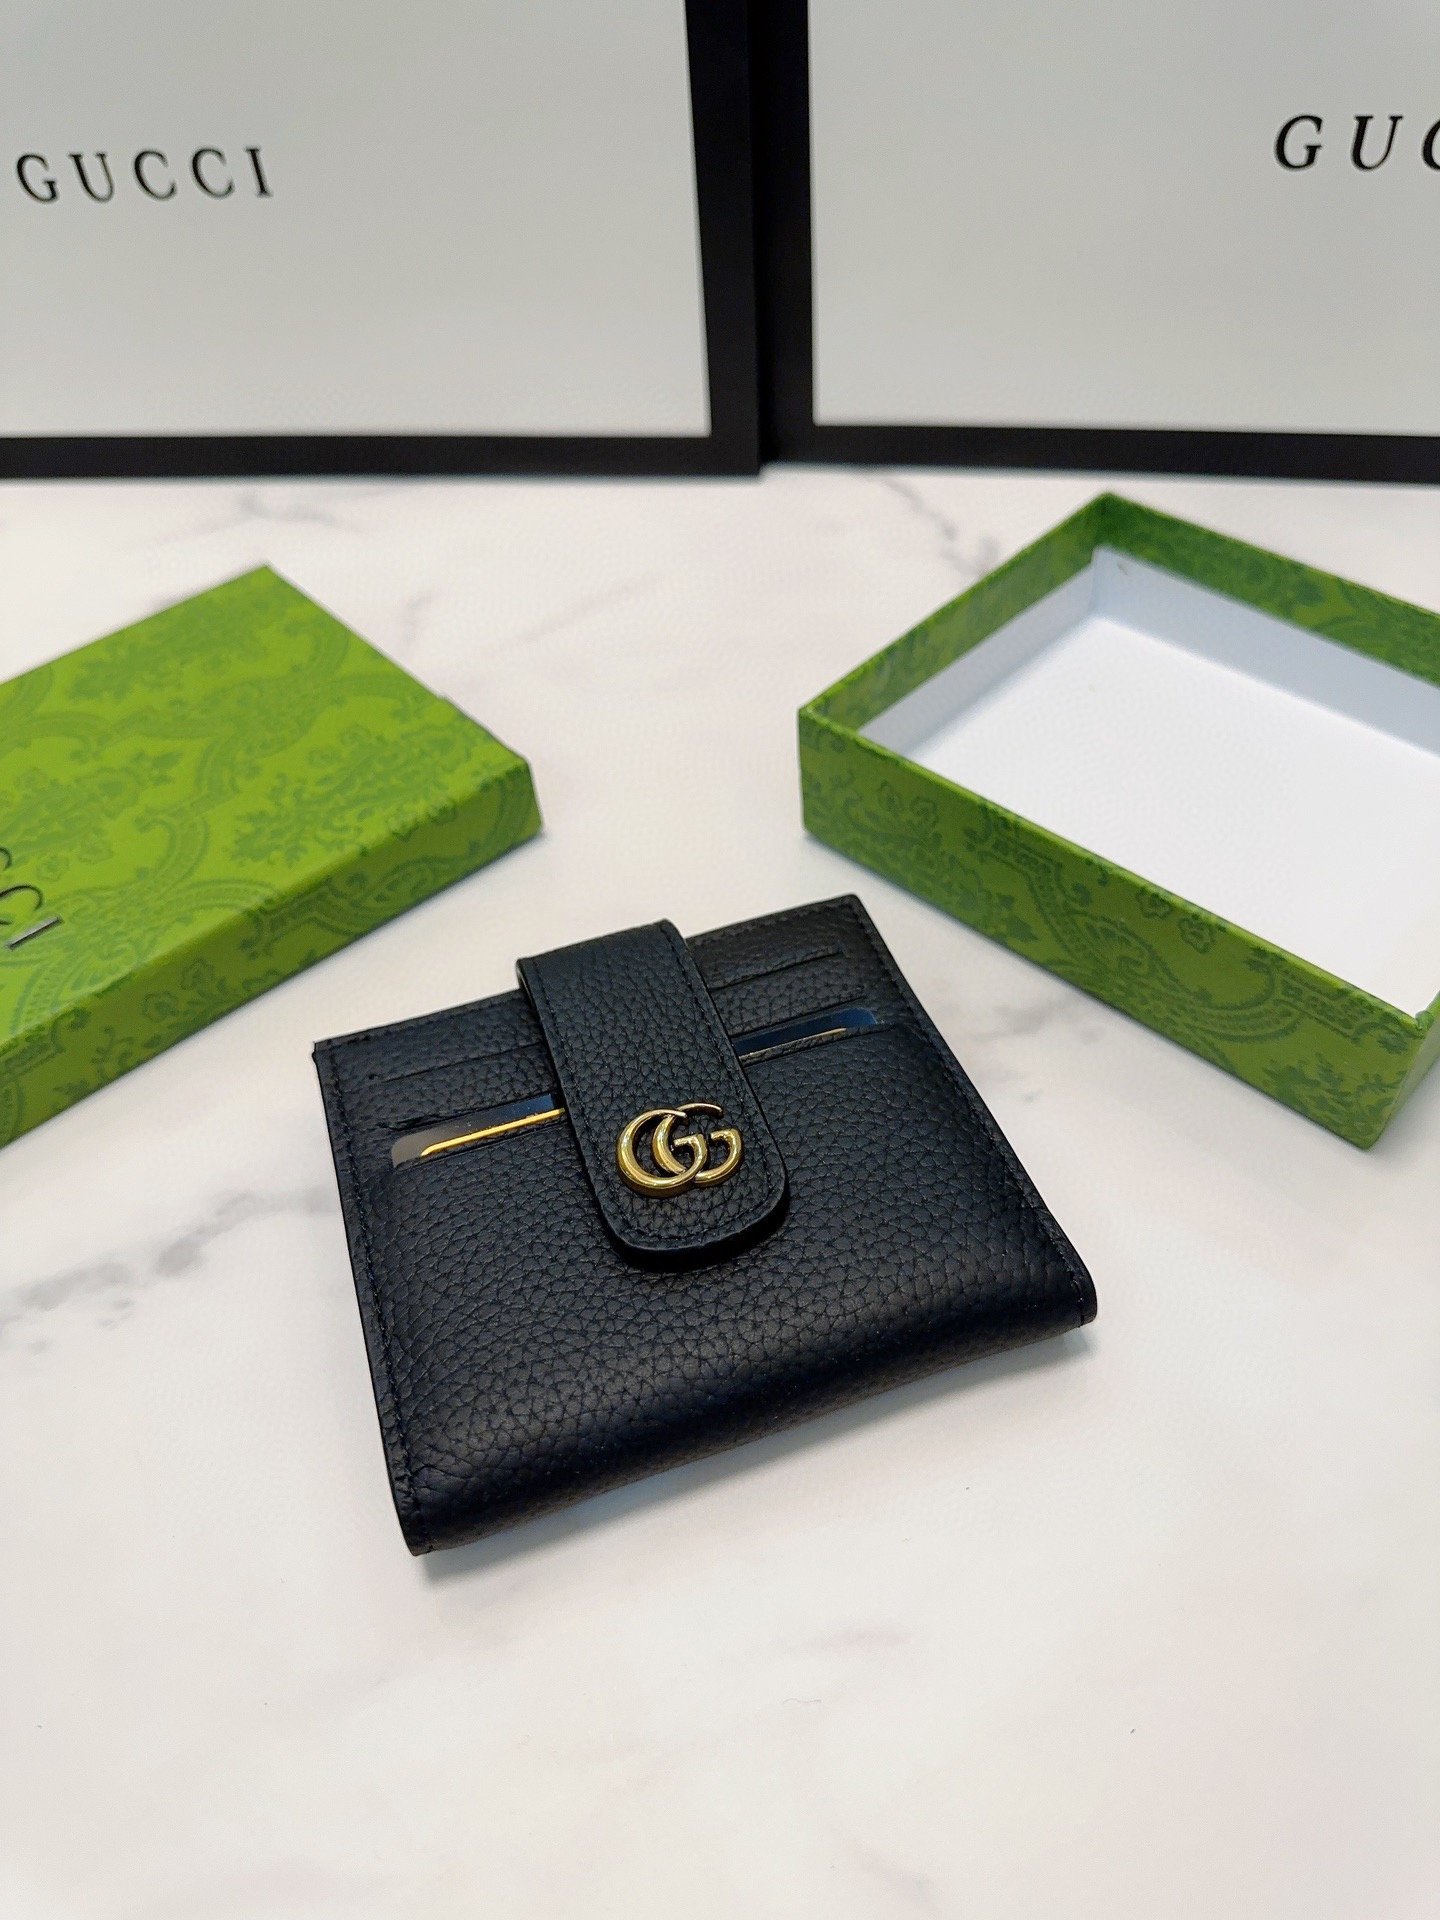 Gucci dual-purpose card bag wallet